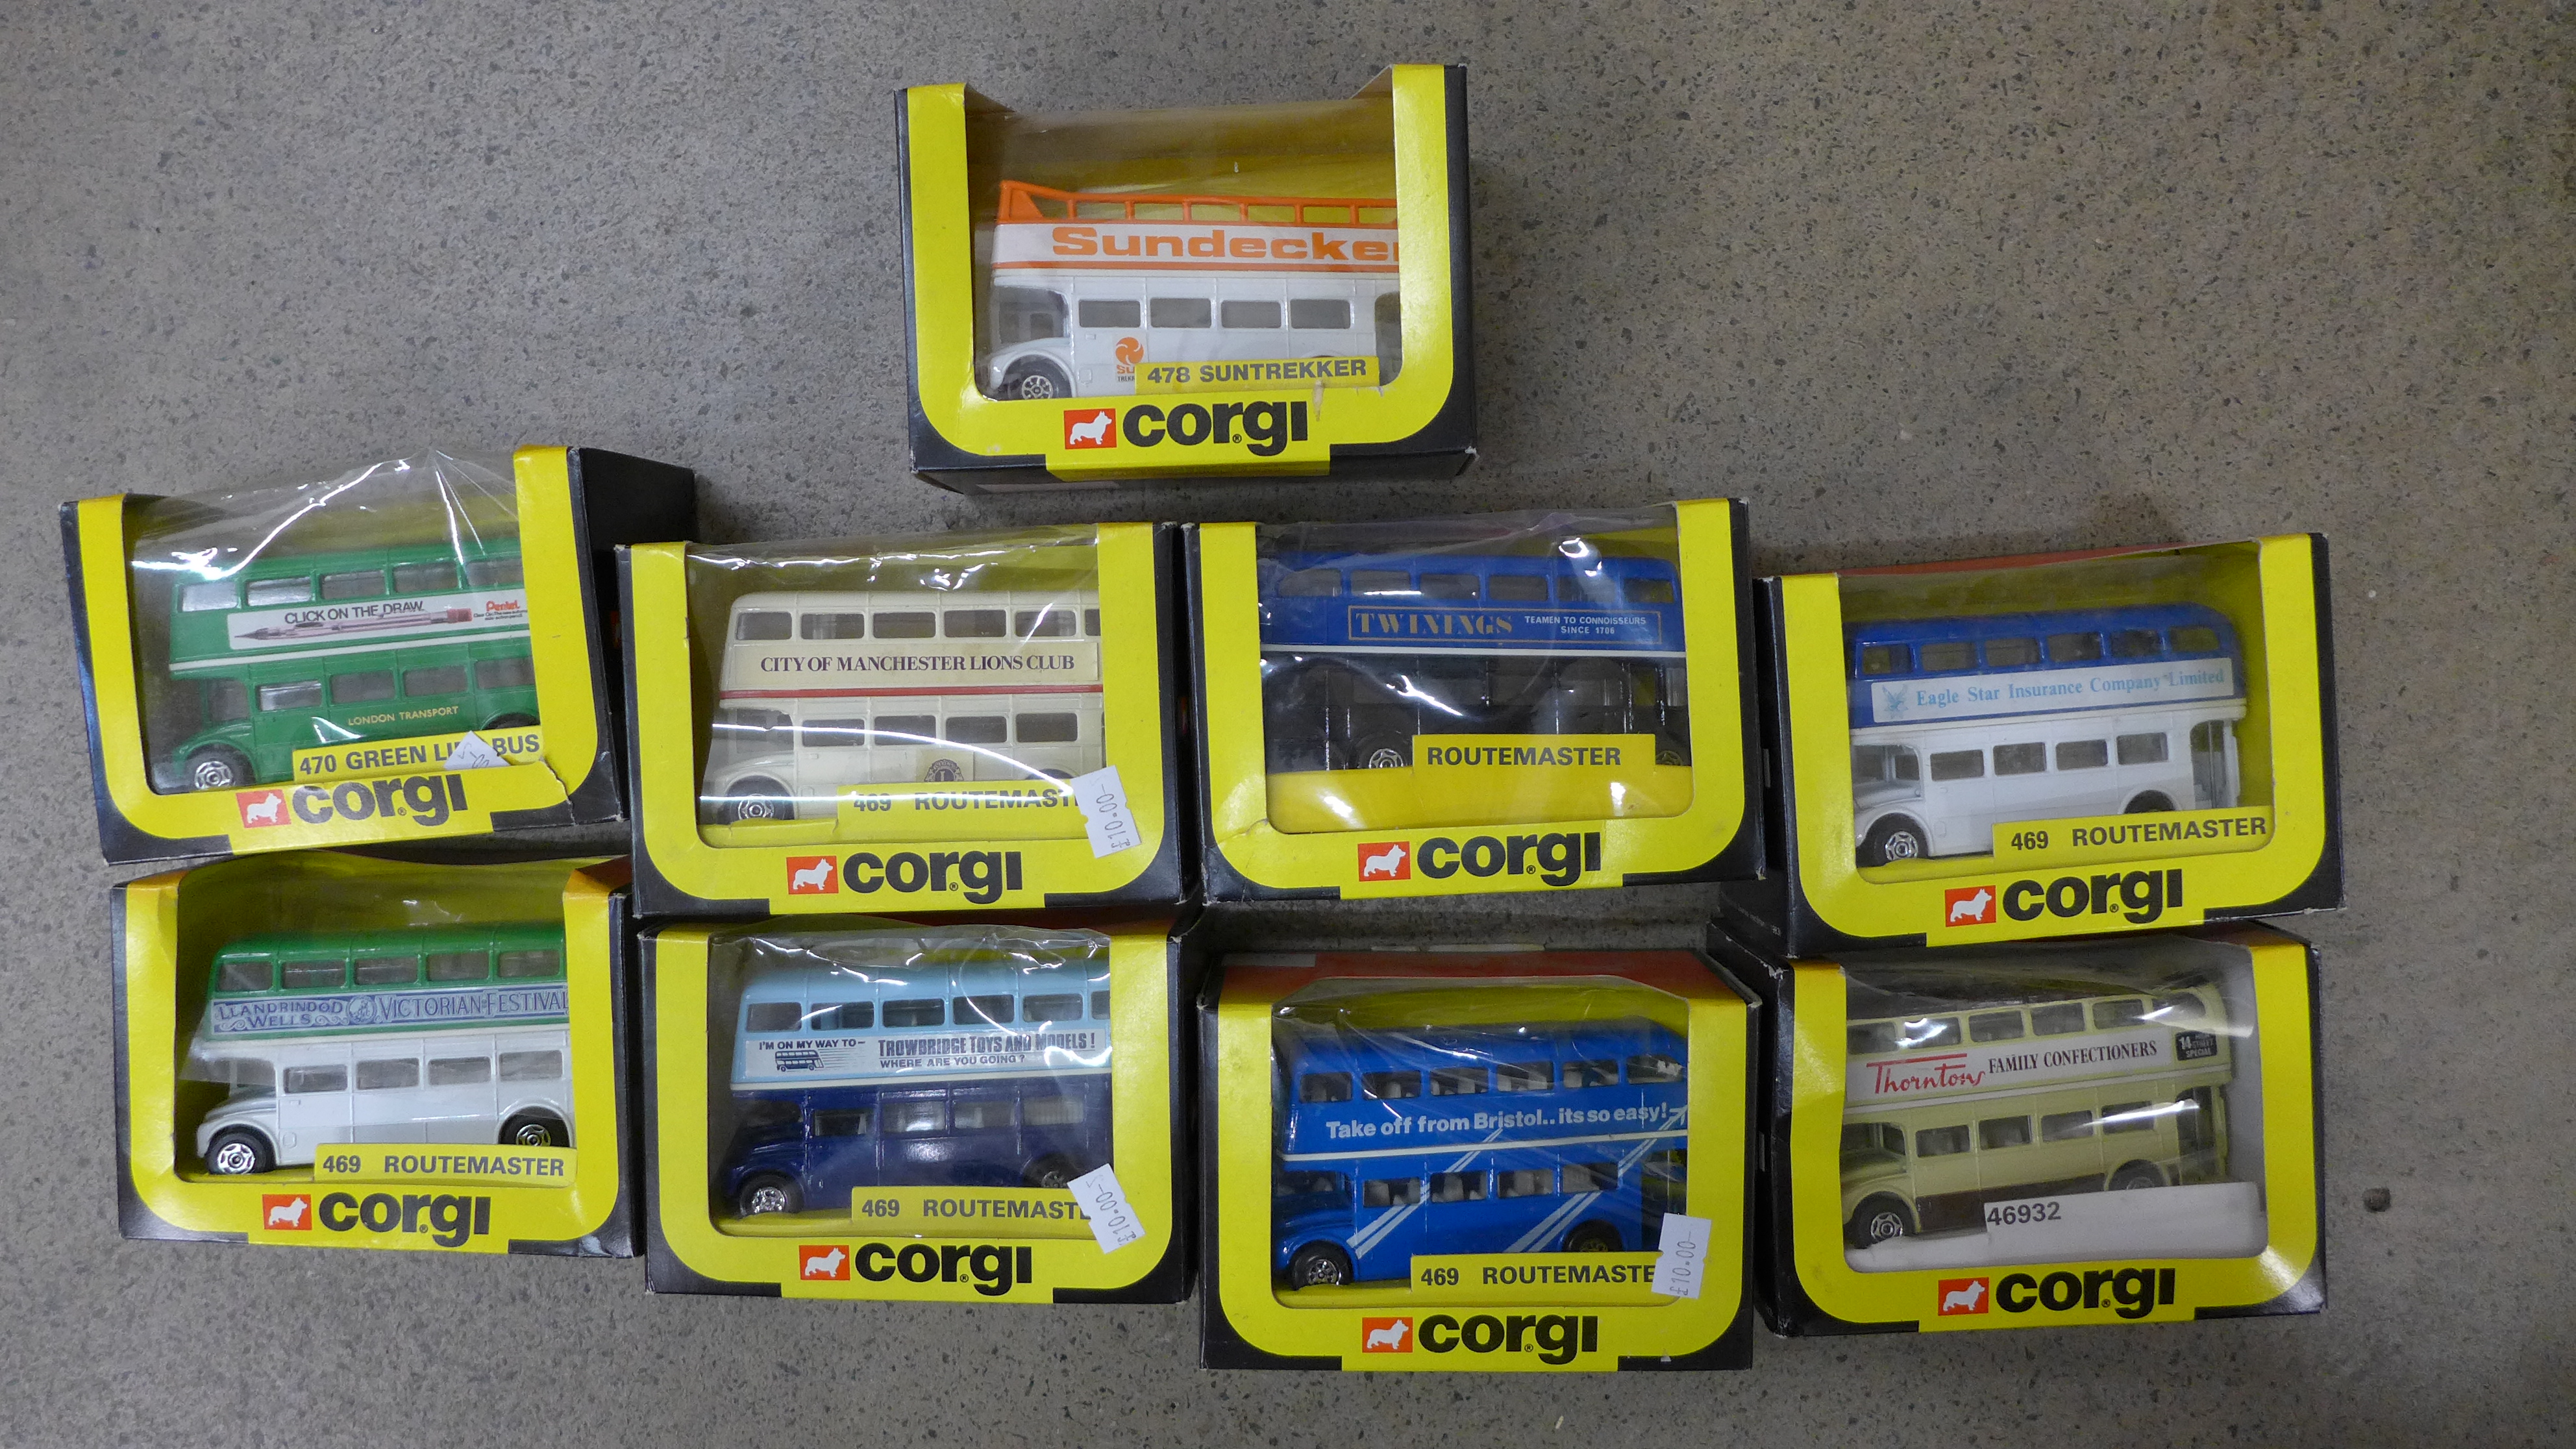 A collection of Corgi buses, boxed